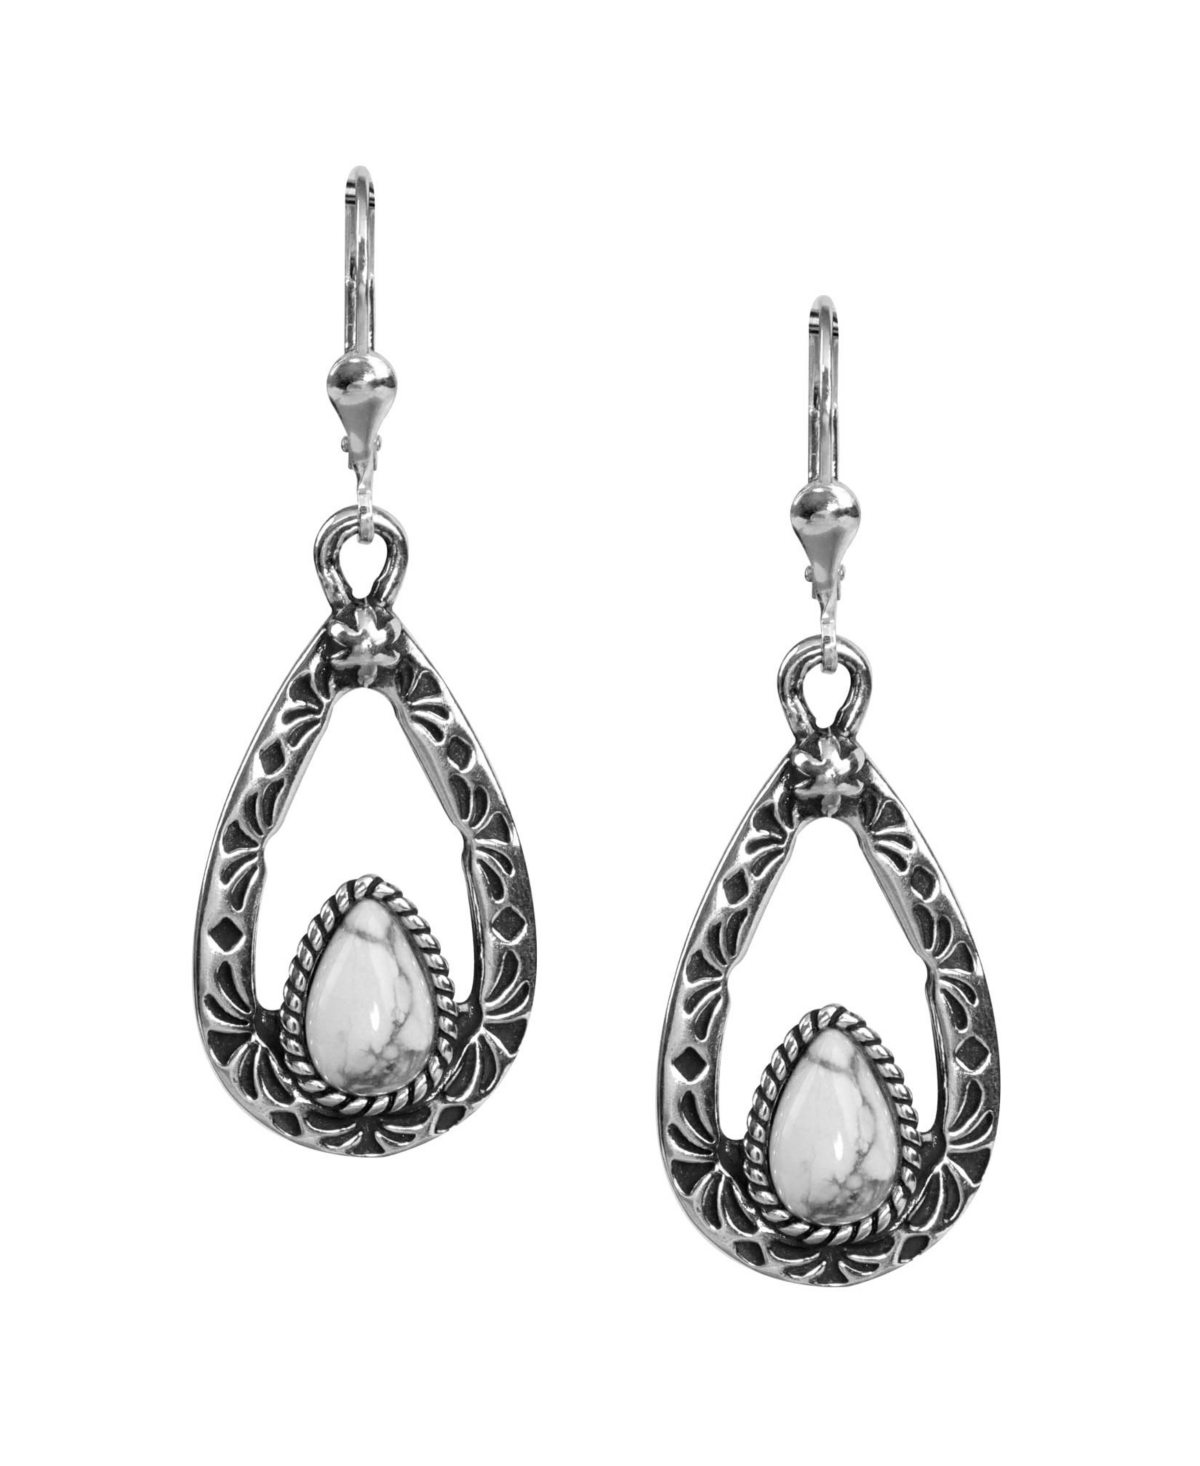 American West Sterling Silver Women's Drop & Dangle Earrings with Genuine Gemstone - White howlite